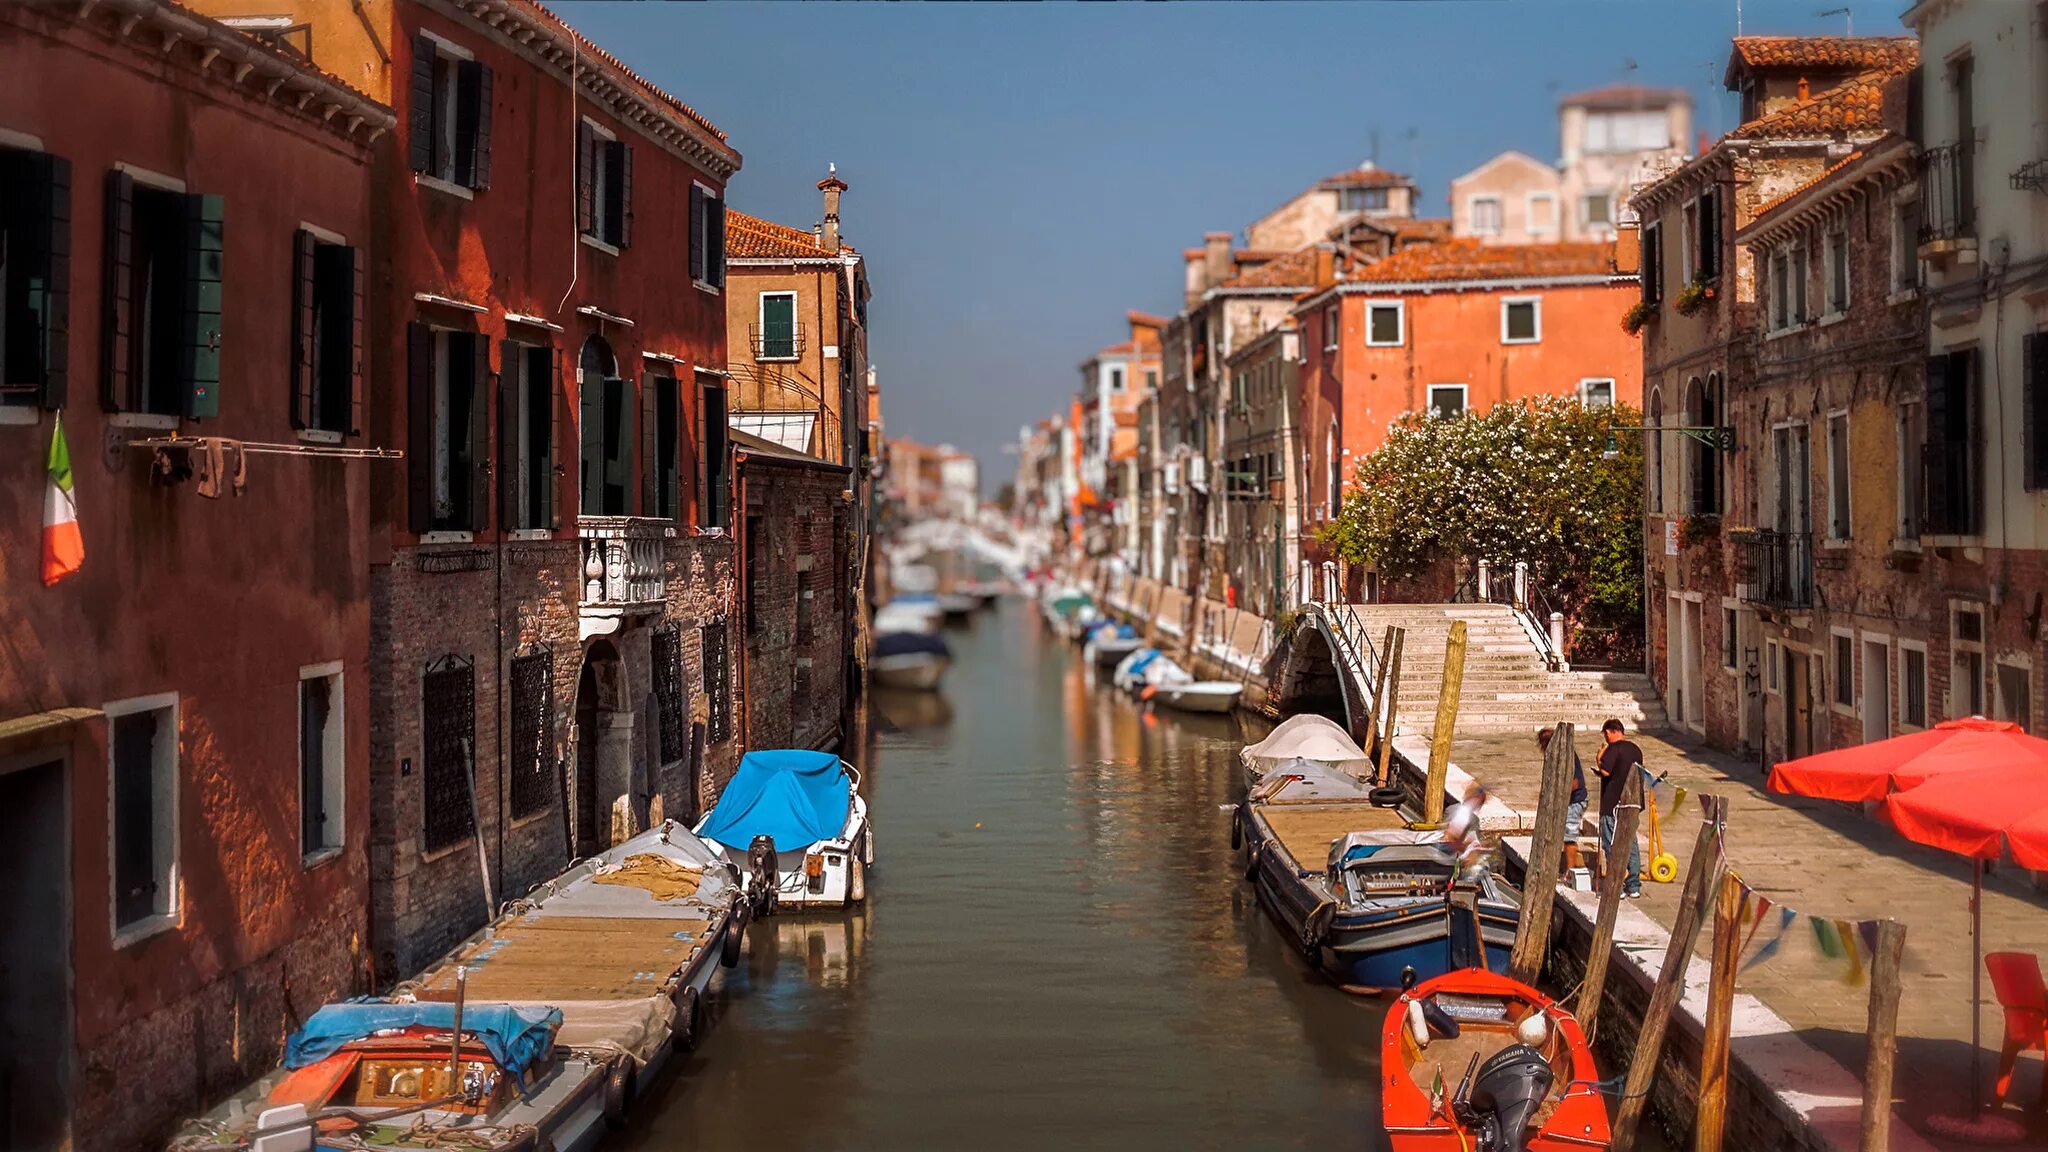 Венеция Италия улочки. Италия каналы Венеции. Венеция итальянская улочка. Италия Венеция улицы. Street river